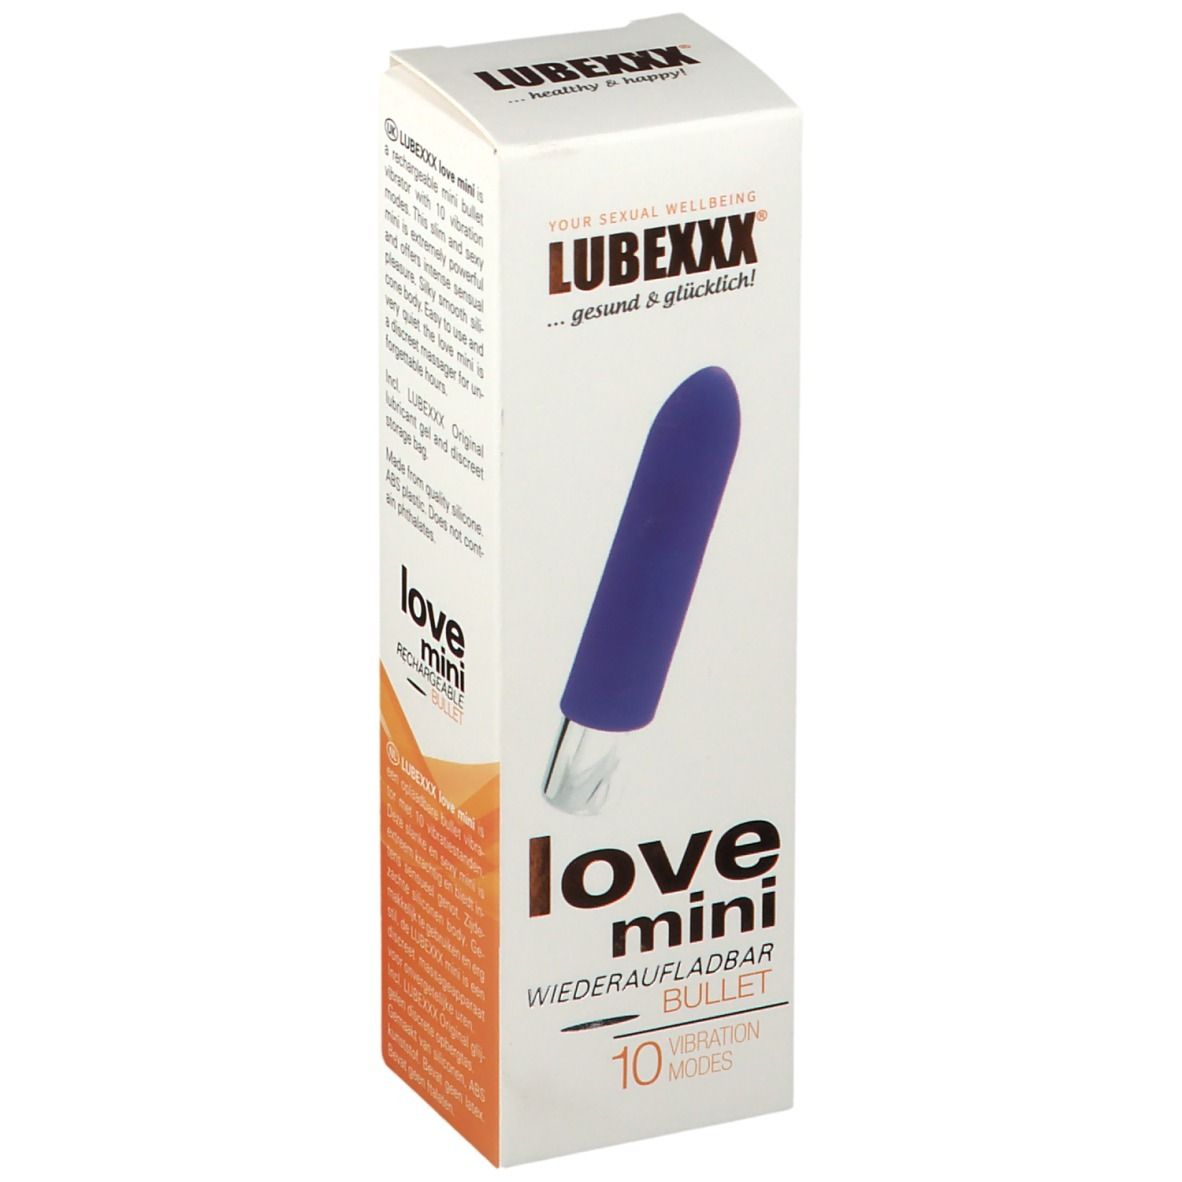 LUBEXXX® love mini